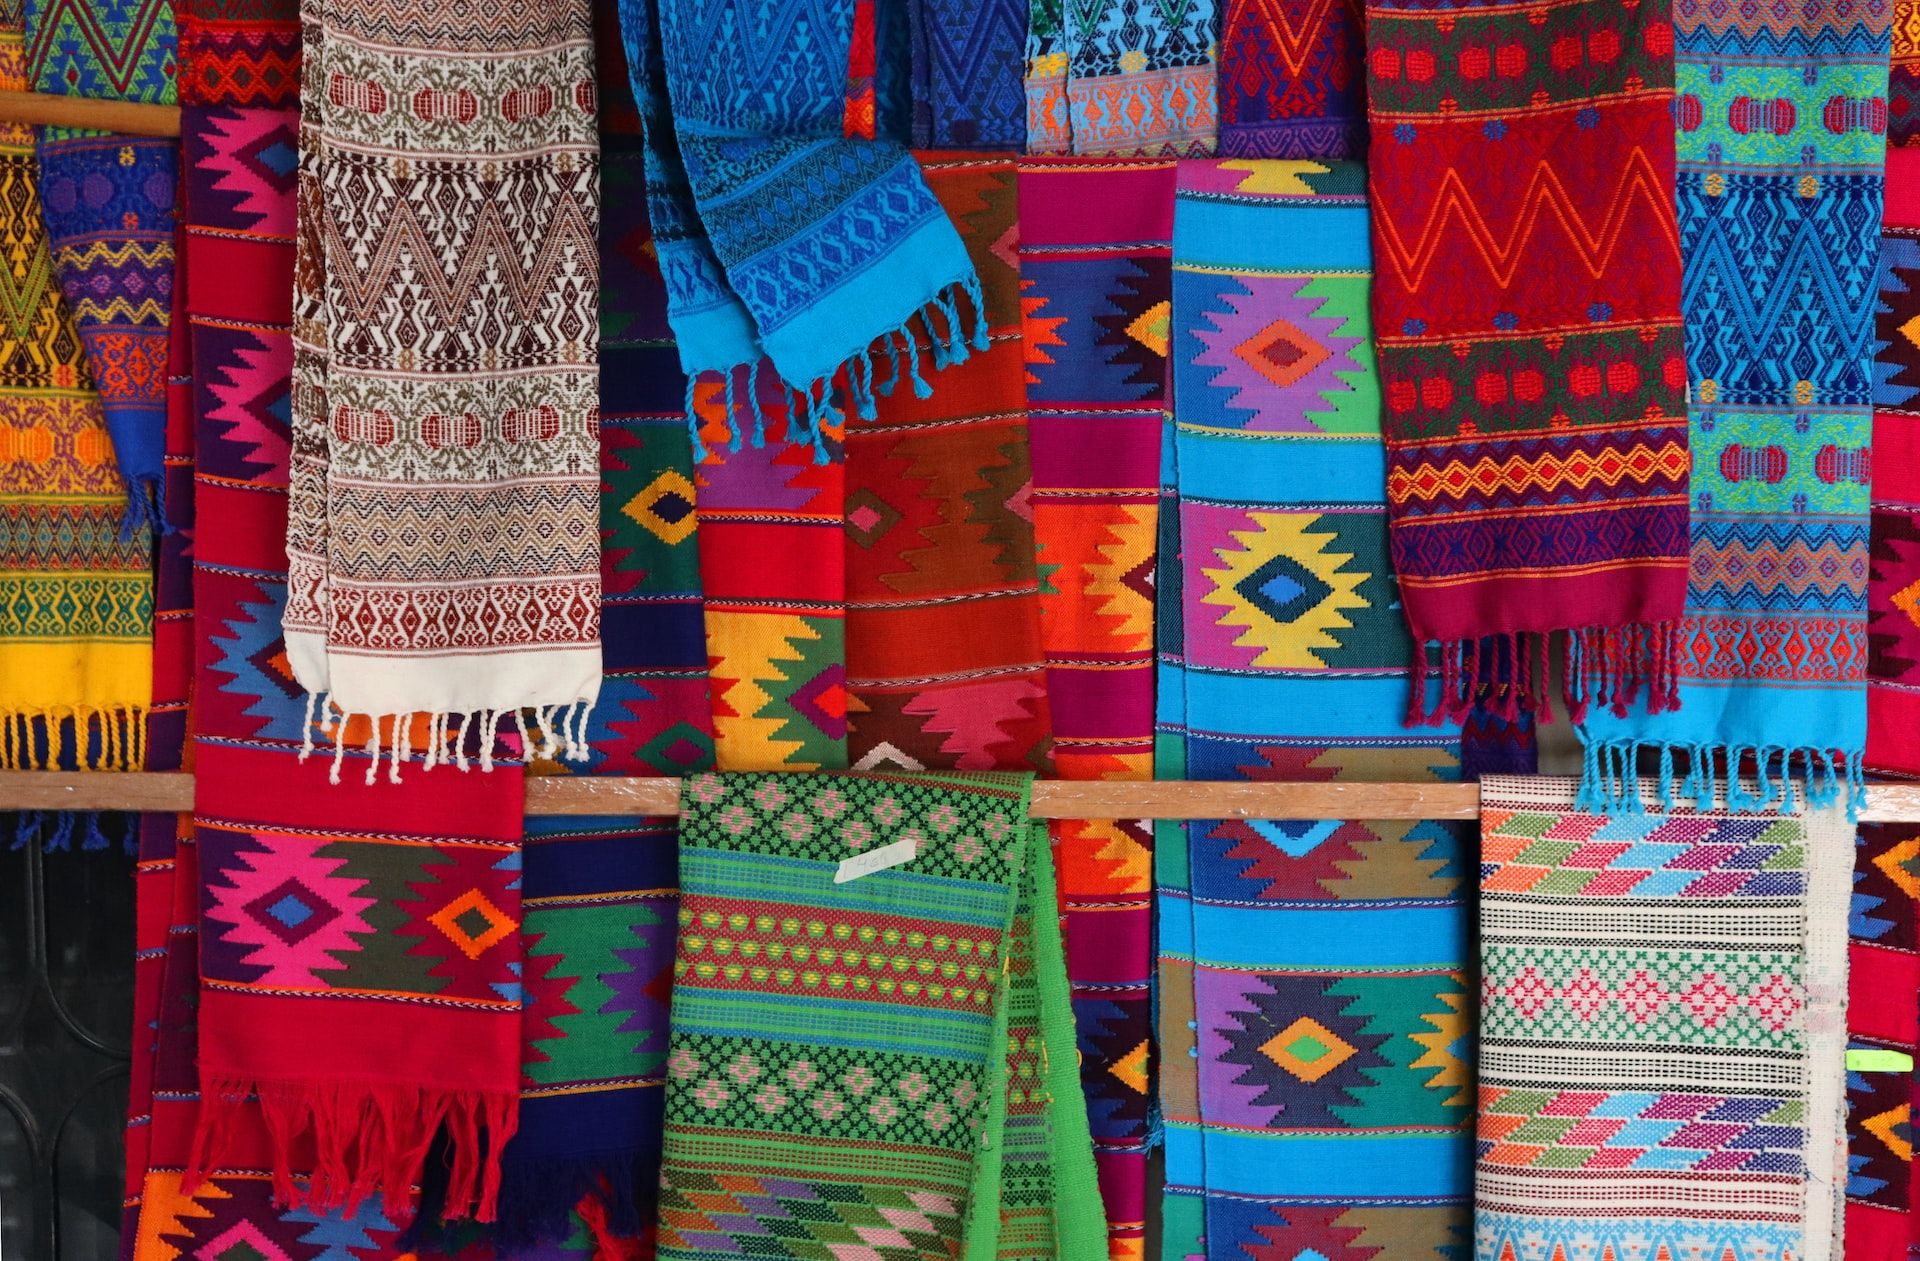 Handmade textiles in Oaxaca, Mexico